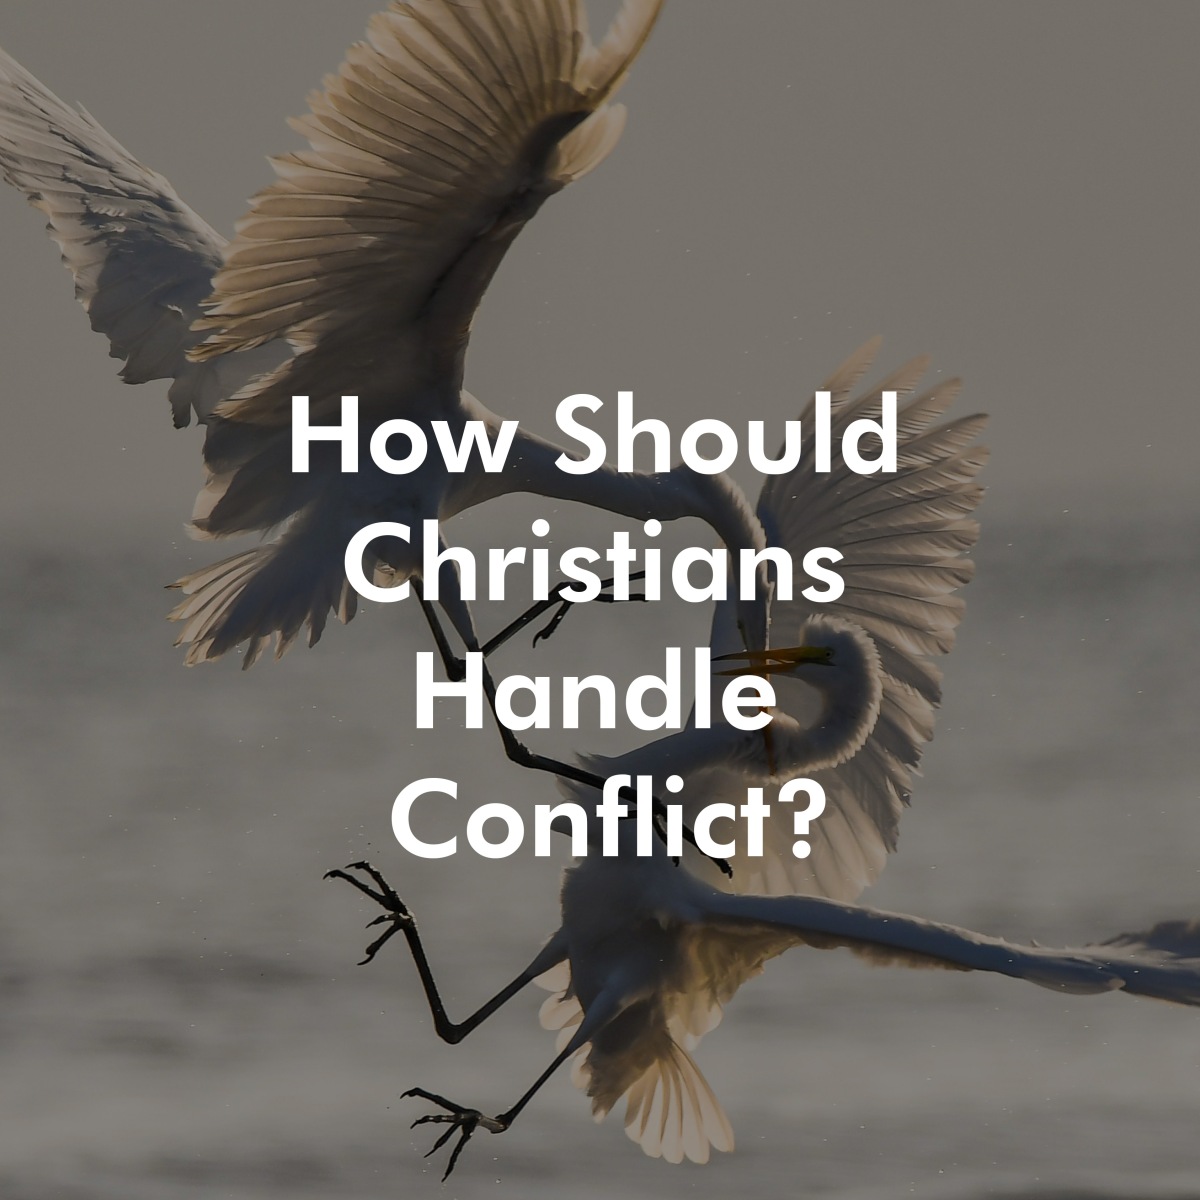 How Should Christians Handle Conflict?